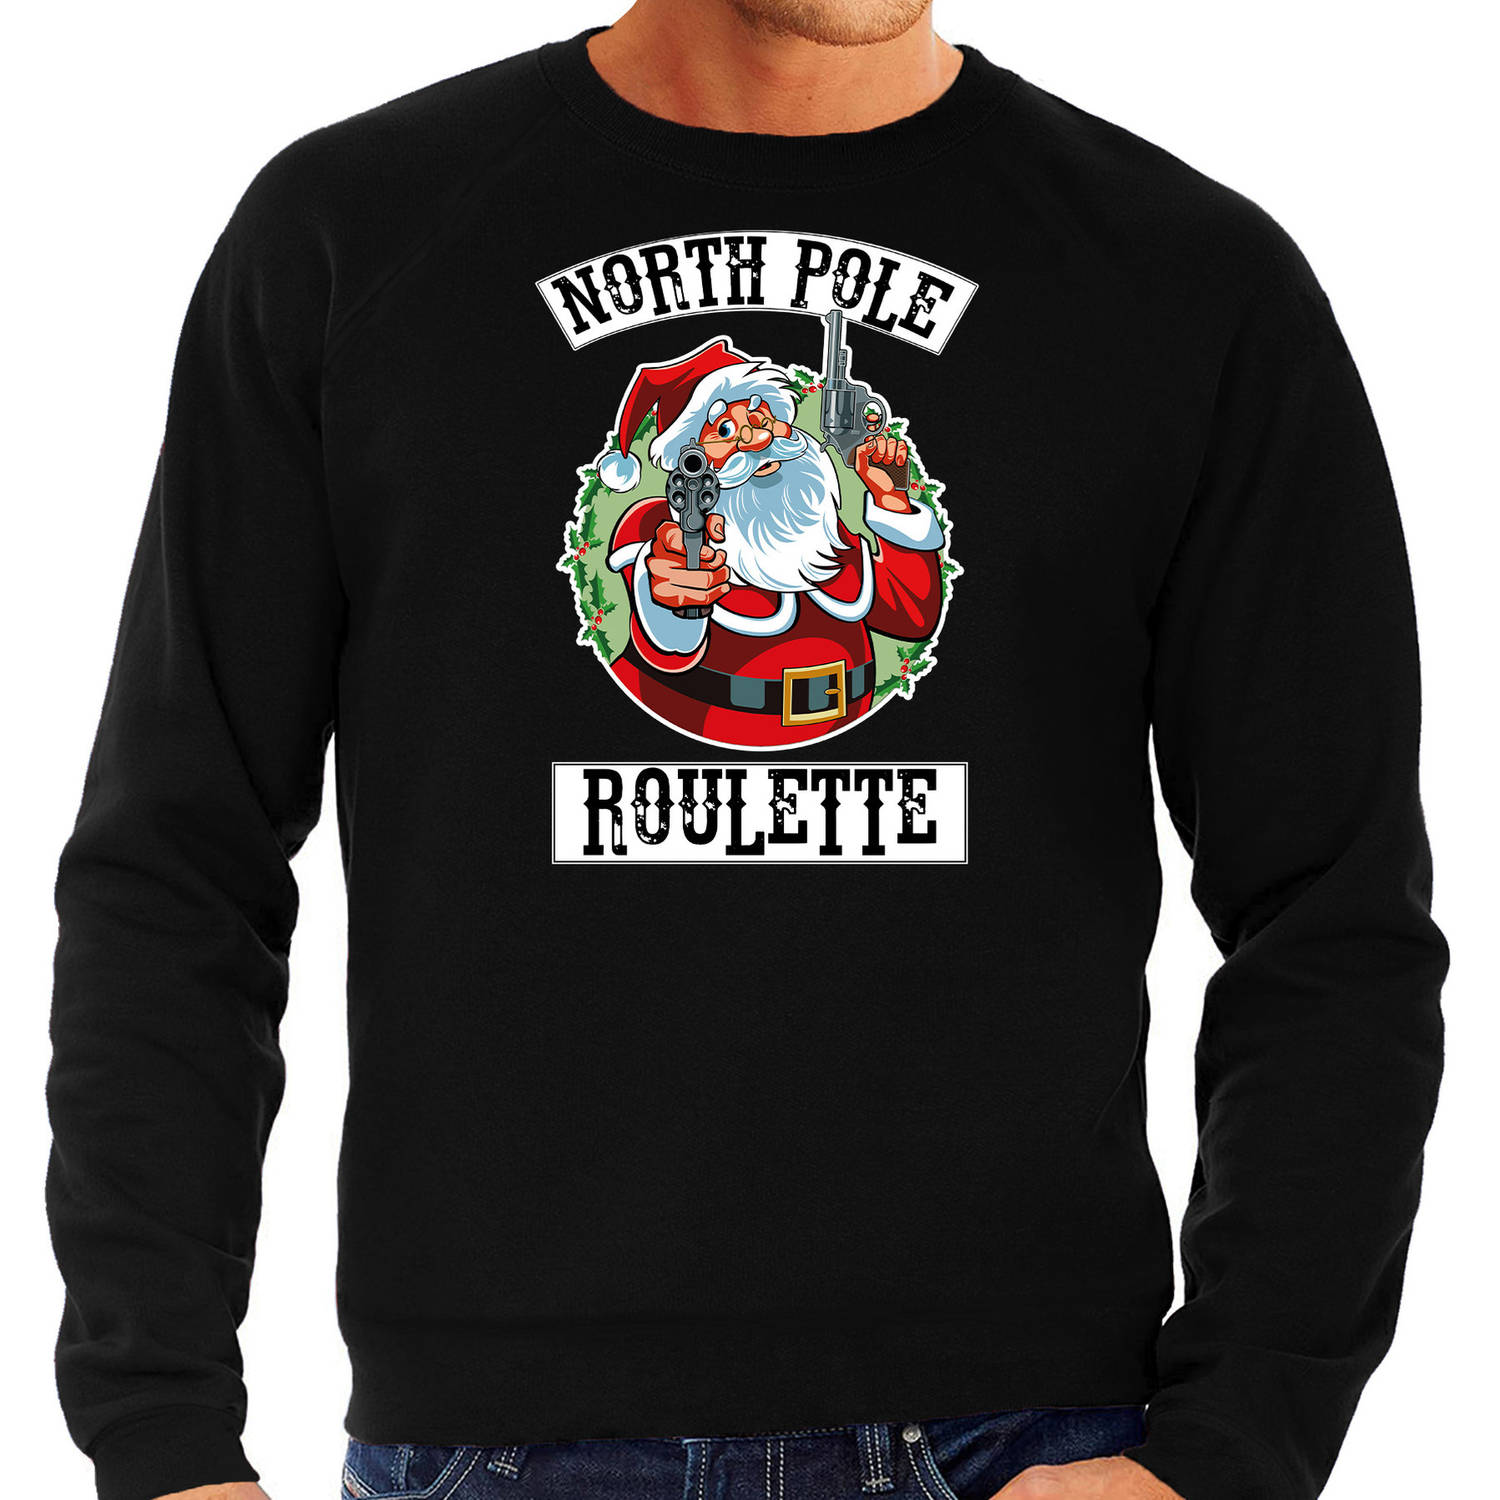 Zwarte Kersttrui / Kerstkleding Northpole roulette voor heren M - kerst truien